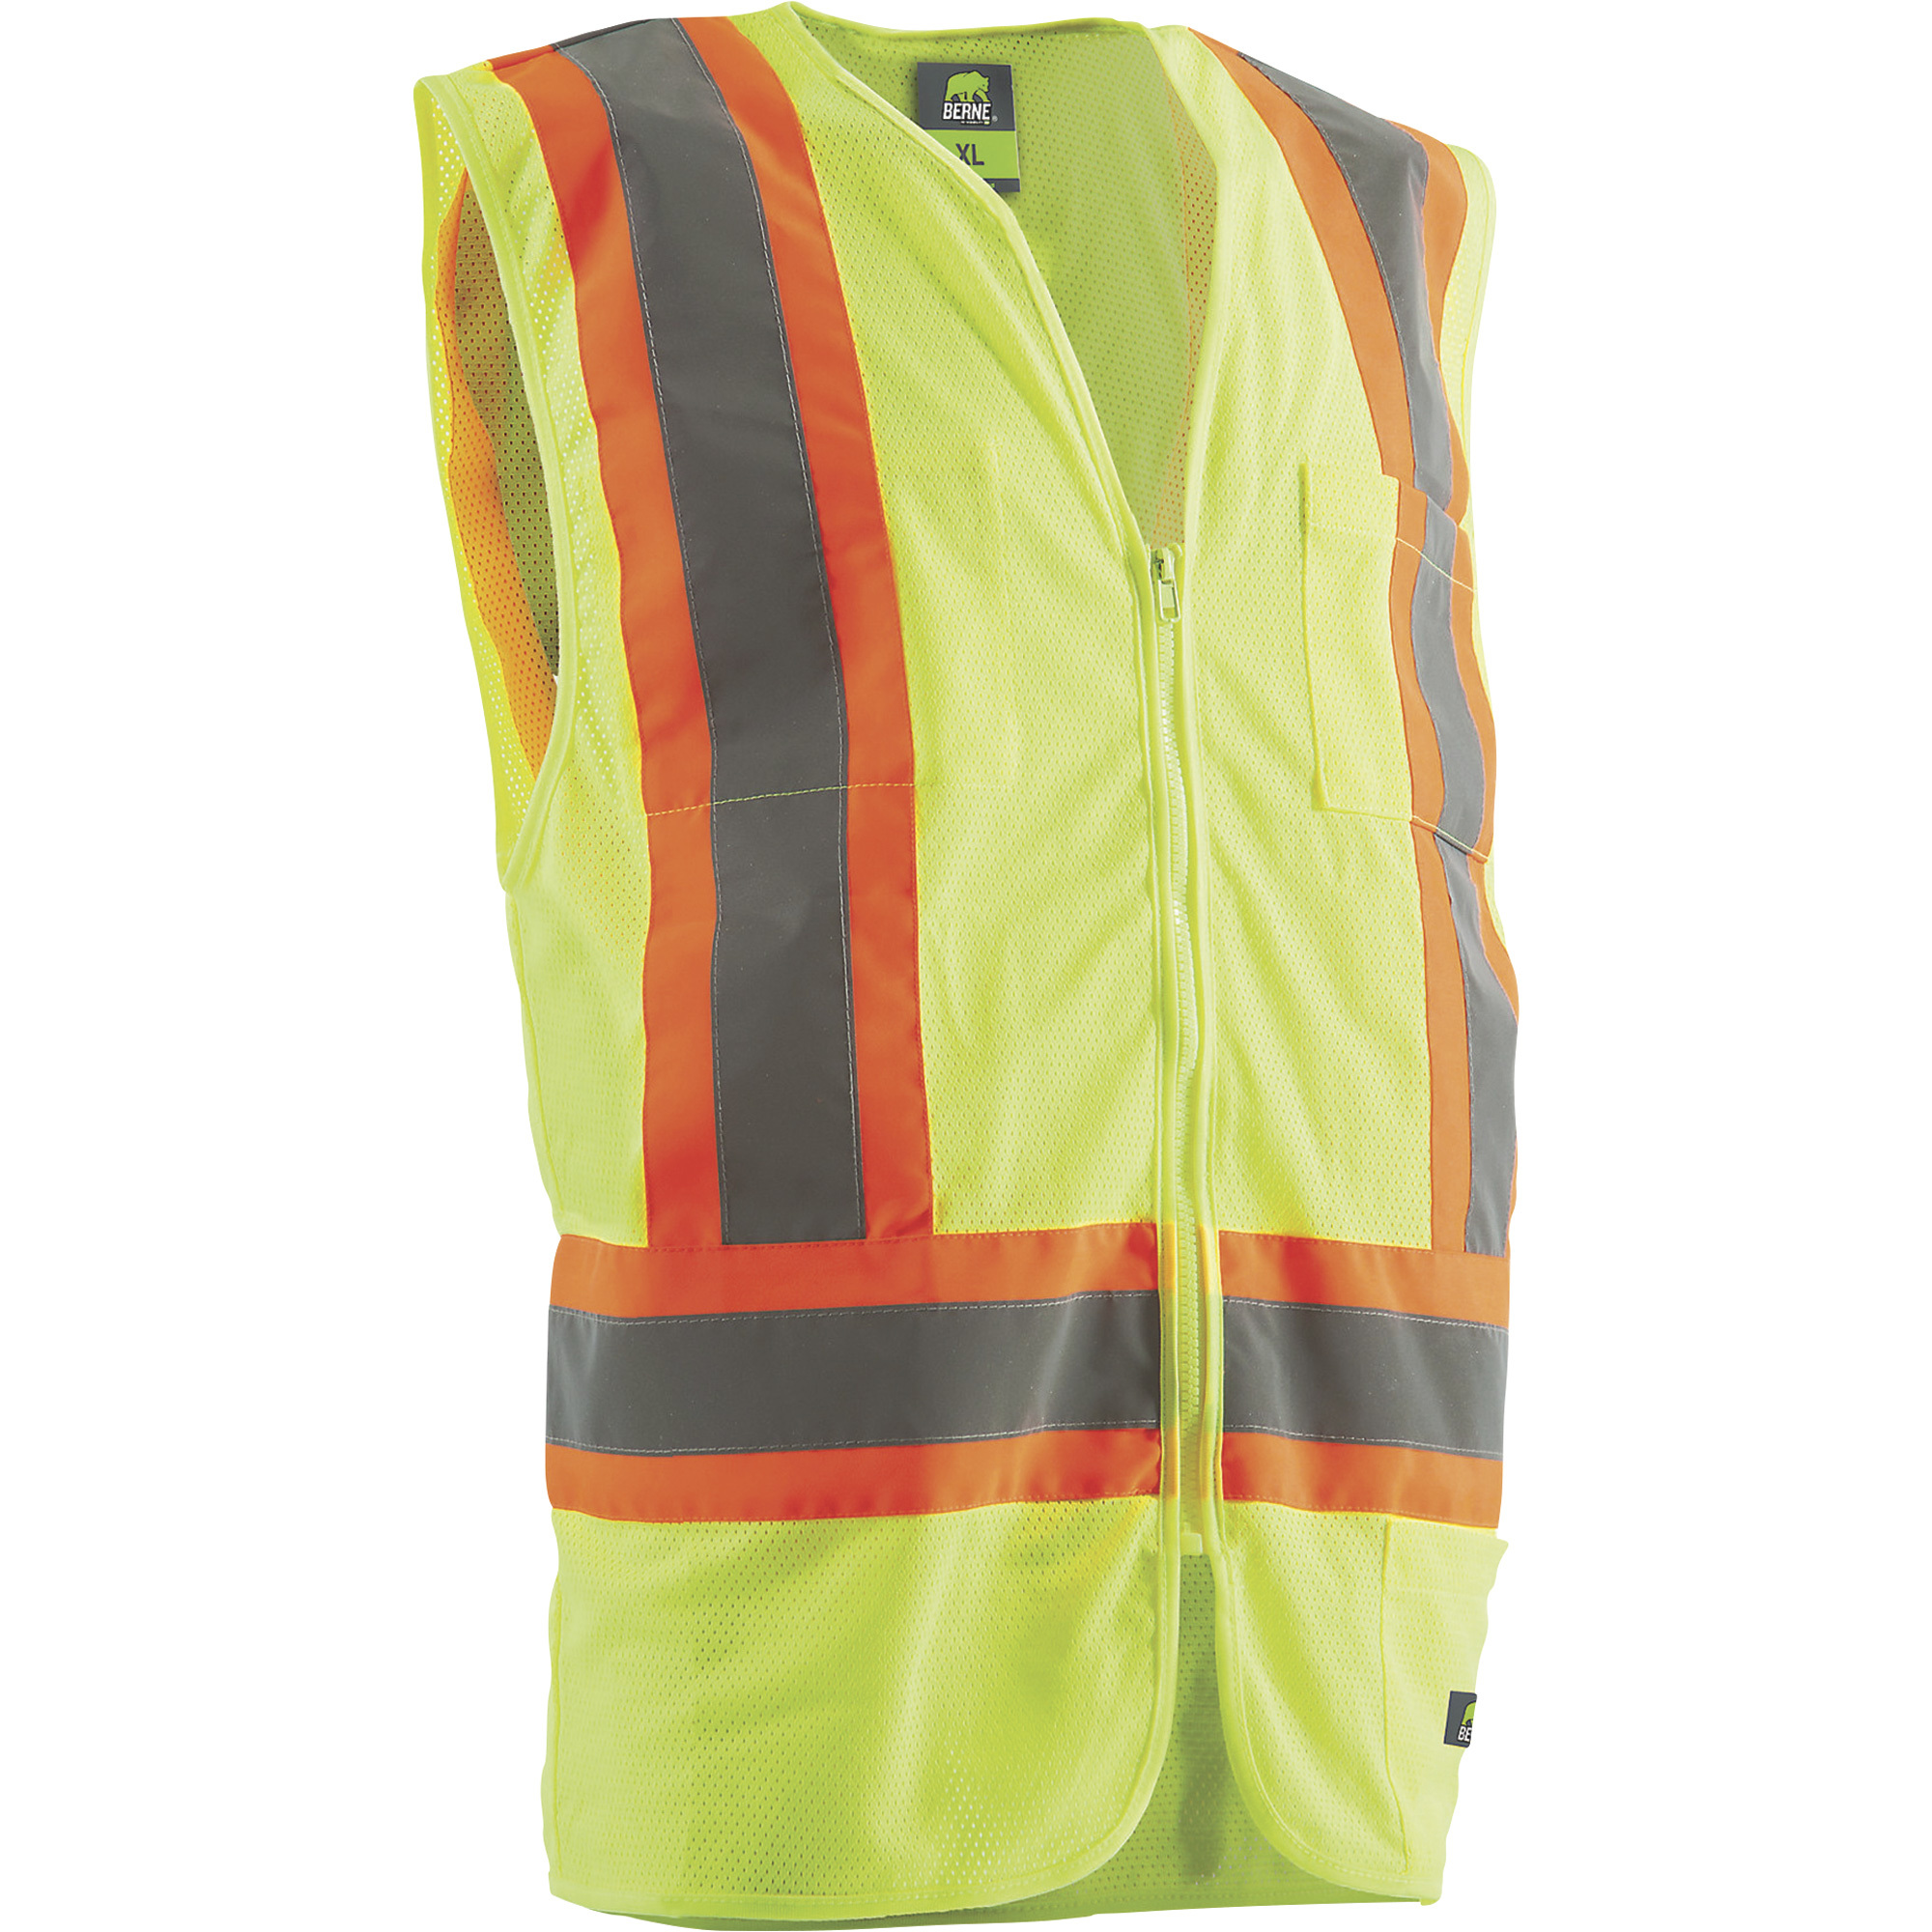 Berne Men's Class 2 High Visibility 2-Tone Safety Vest â Orange/Lime, 4XL/Big, Model HVV046YWBT